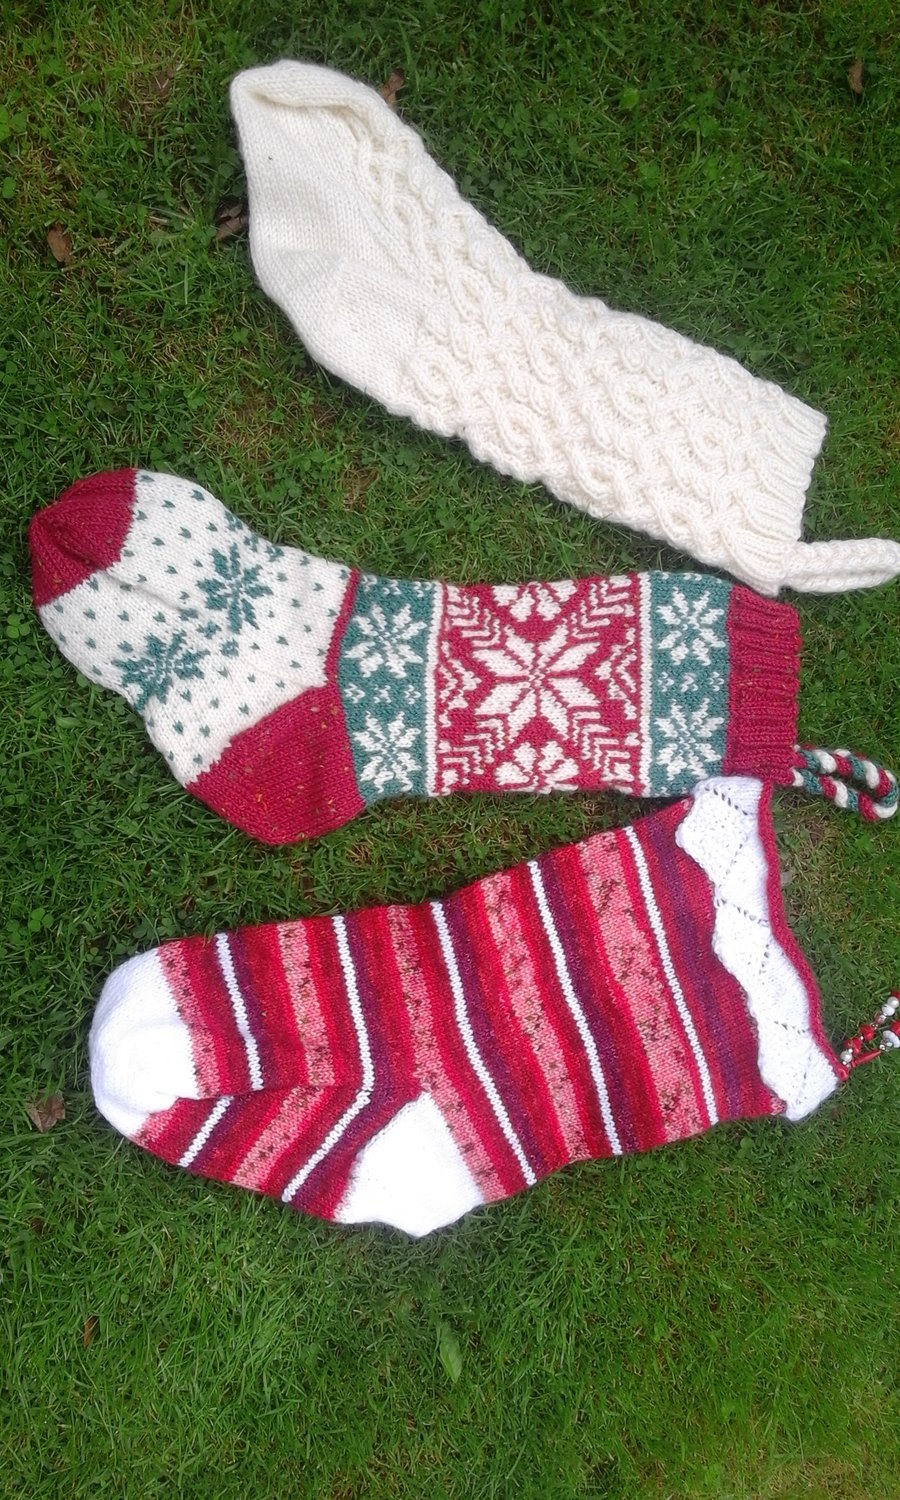 Knitting pattern for 3 traditional Christmas stockings - digital pattern ckc011